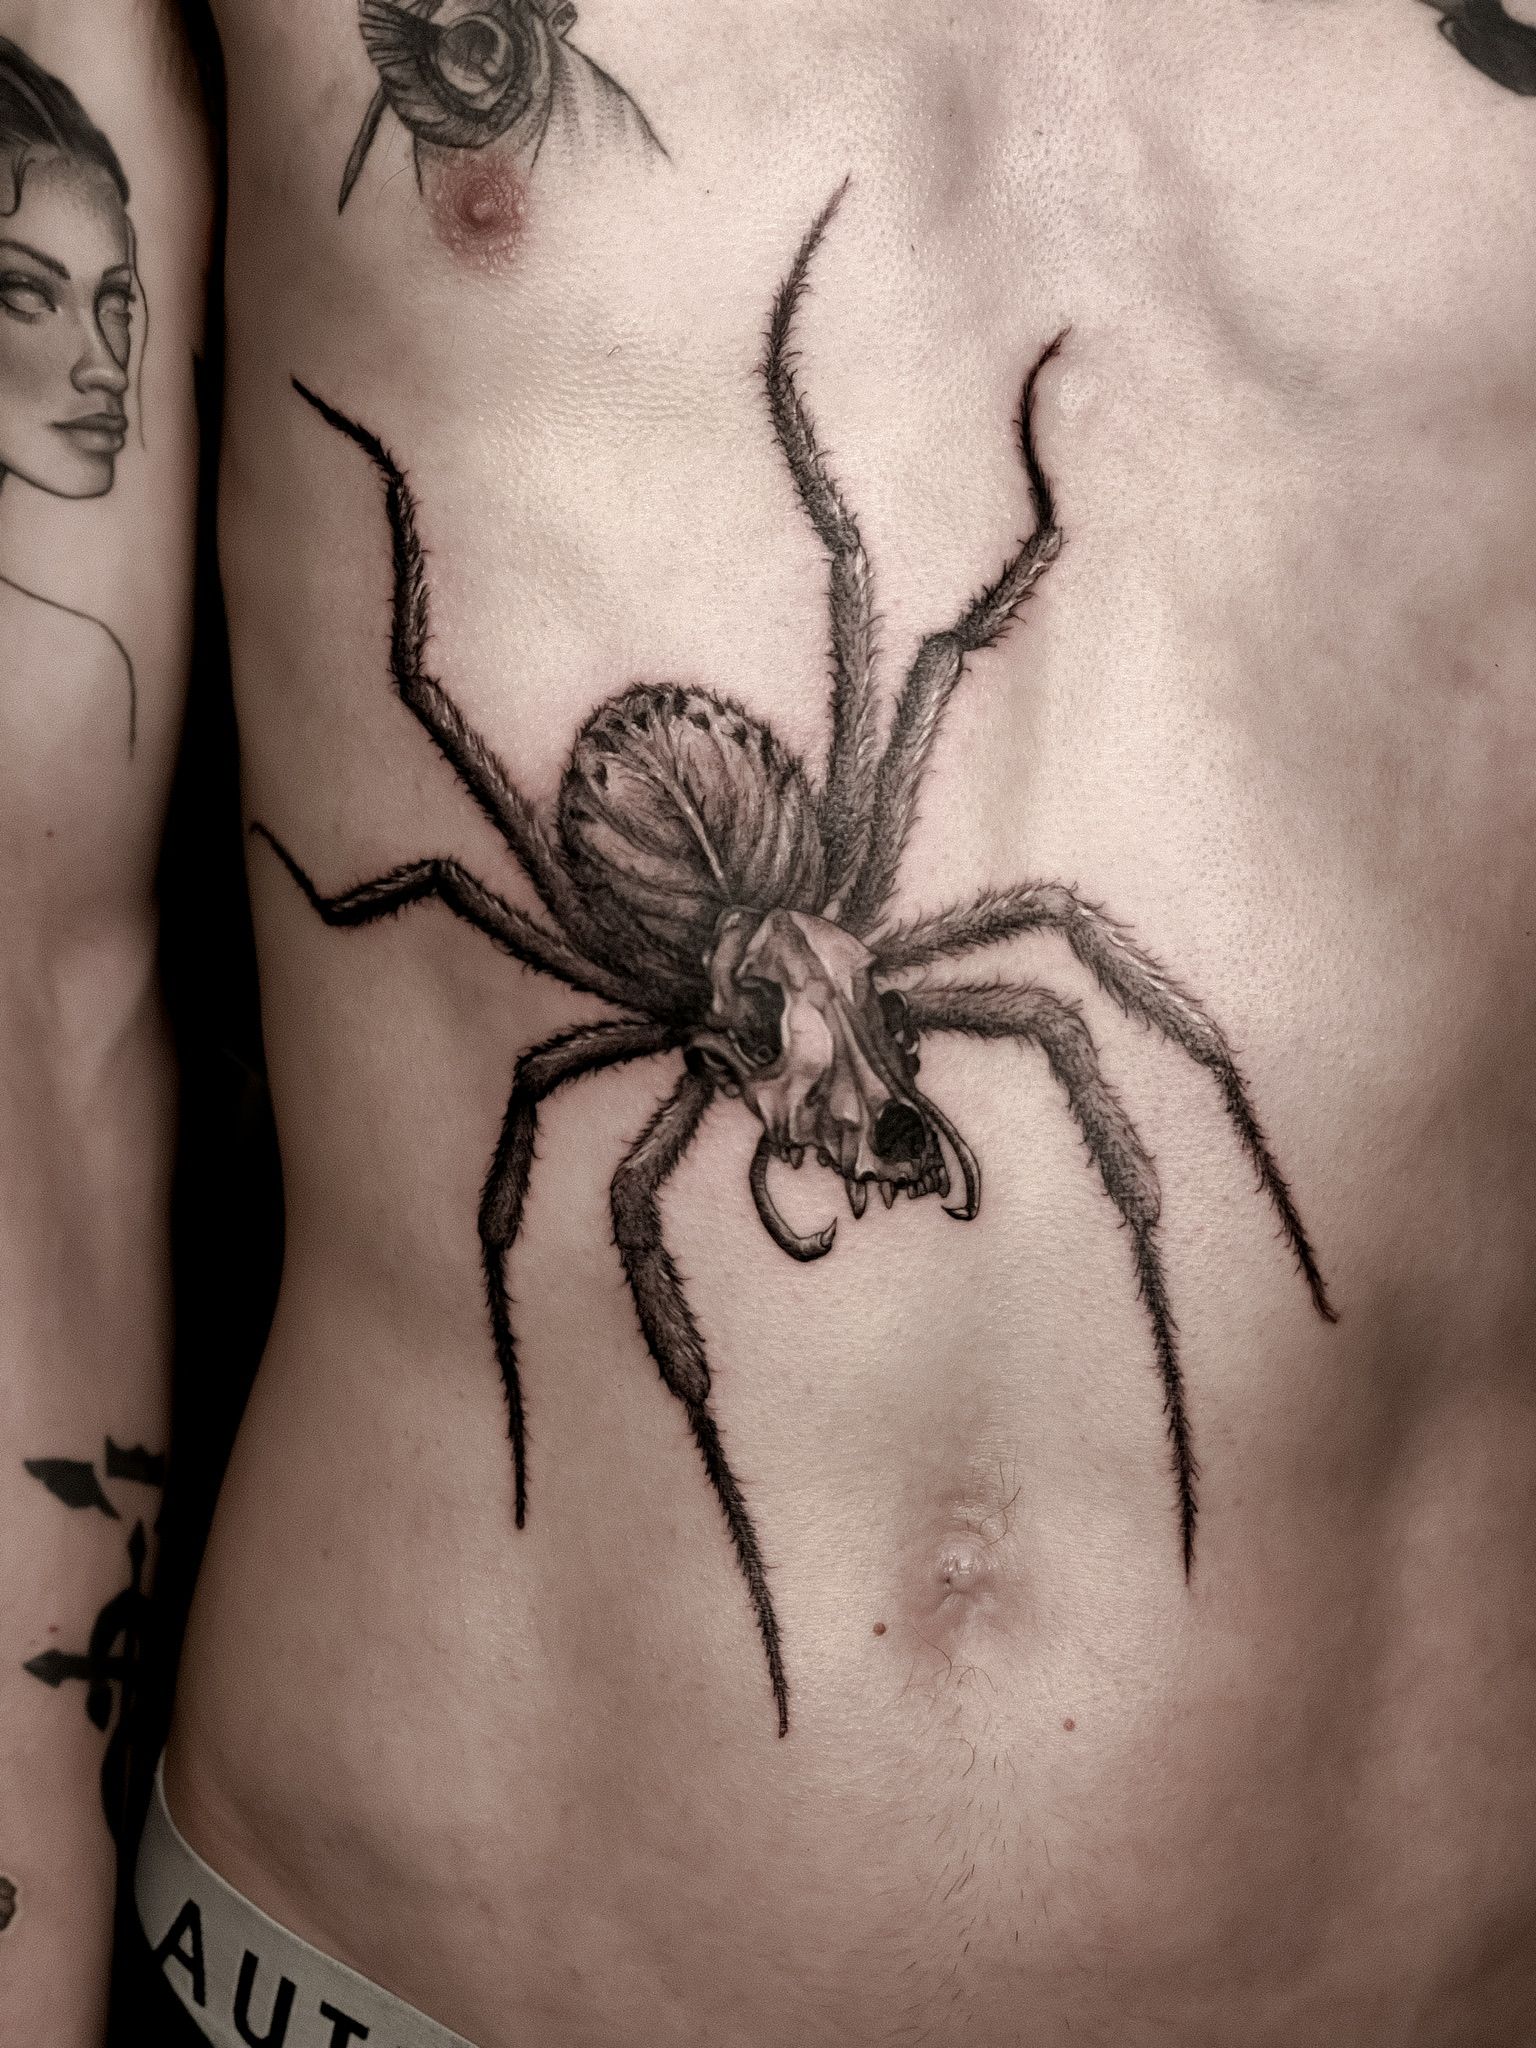 100 Spiderman Tattoo Design Ideas For Men  Wild Webs Of Ink  Spiderman  tattoo Spider tattoo Chest tattoo men